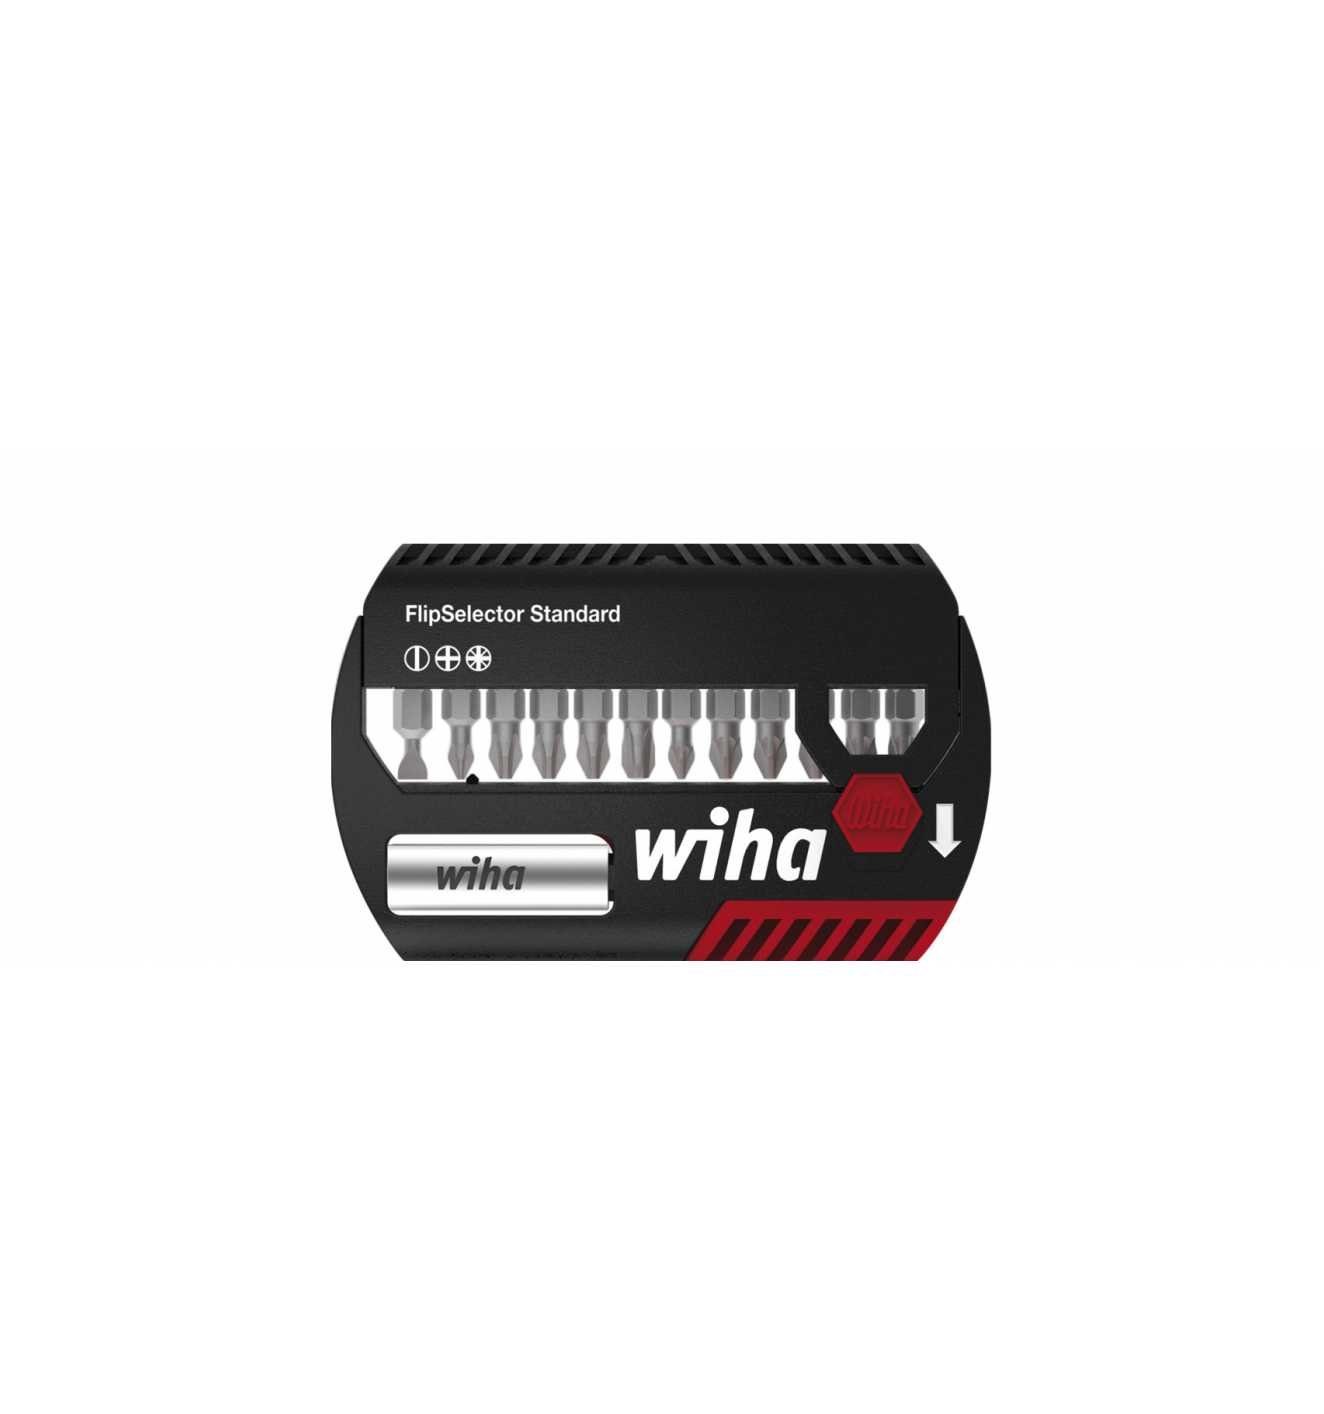 Wiha Bit-Set FlipSelector Standard 25 mm, Schlitz, Phillips, Pozidriv 15-tlg. 1/4" C6,3 mit Gürtelclip (39049)